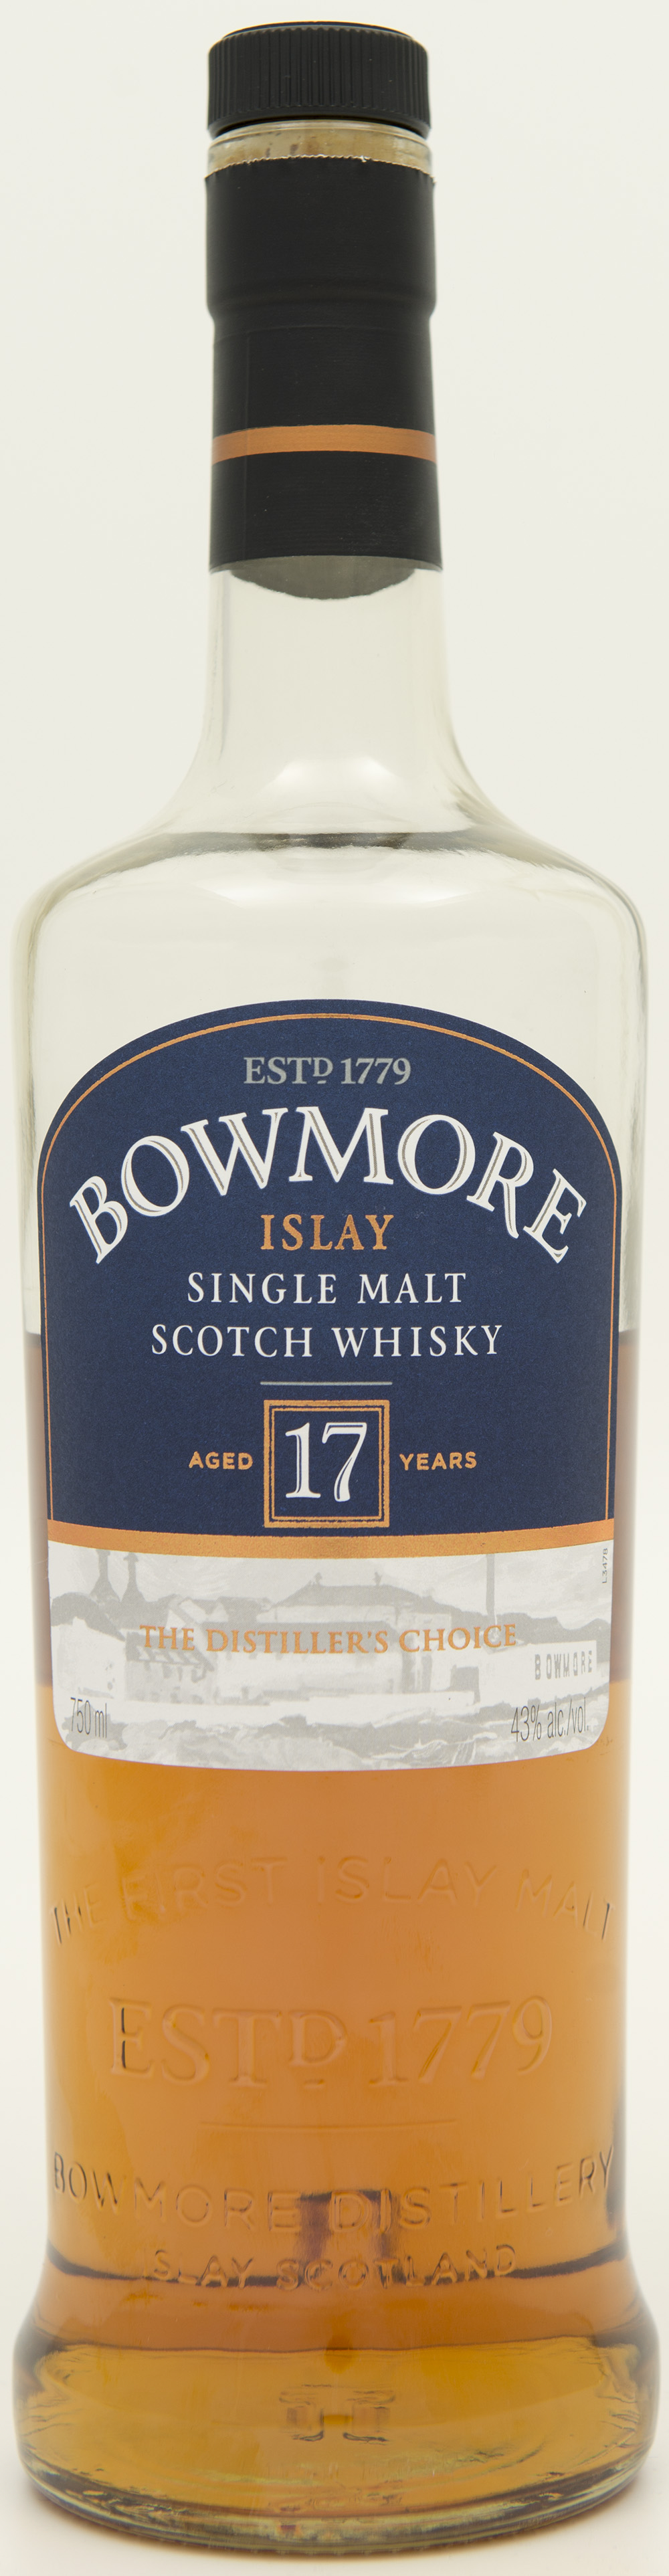 Billede: DSC_1125 - Bowmore 17 The Distillers Choice - bottle front.jpg